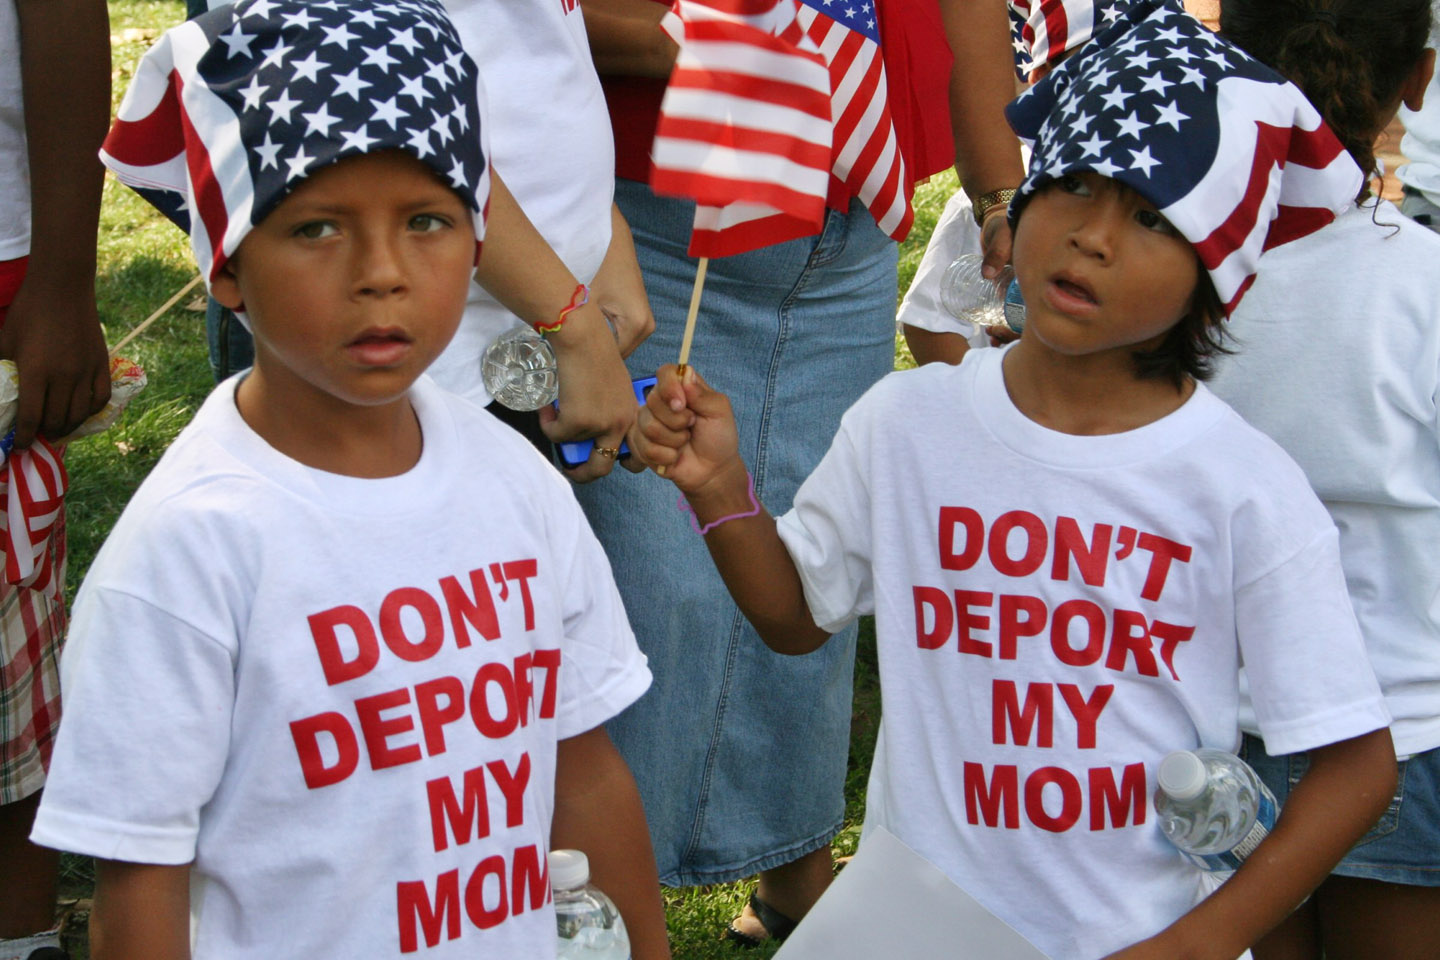 web-immigrants-children-deportation-us-america-cfpereda-cc.jpg